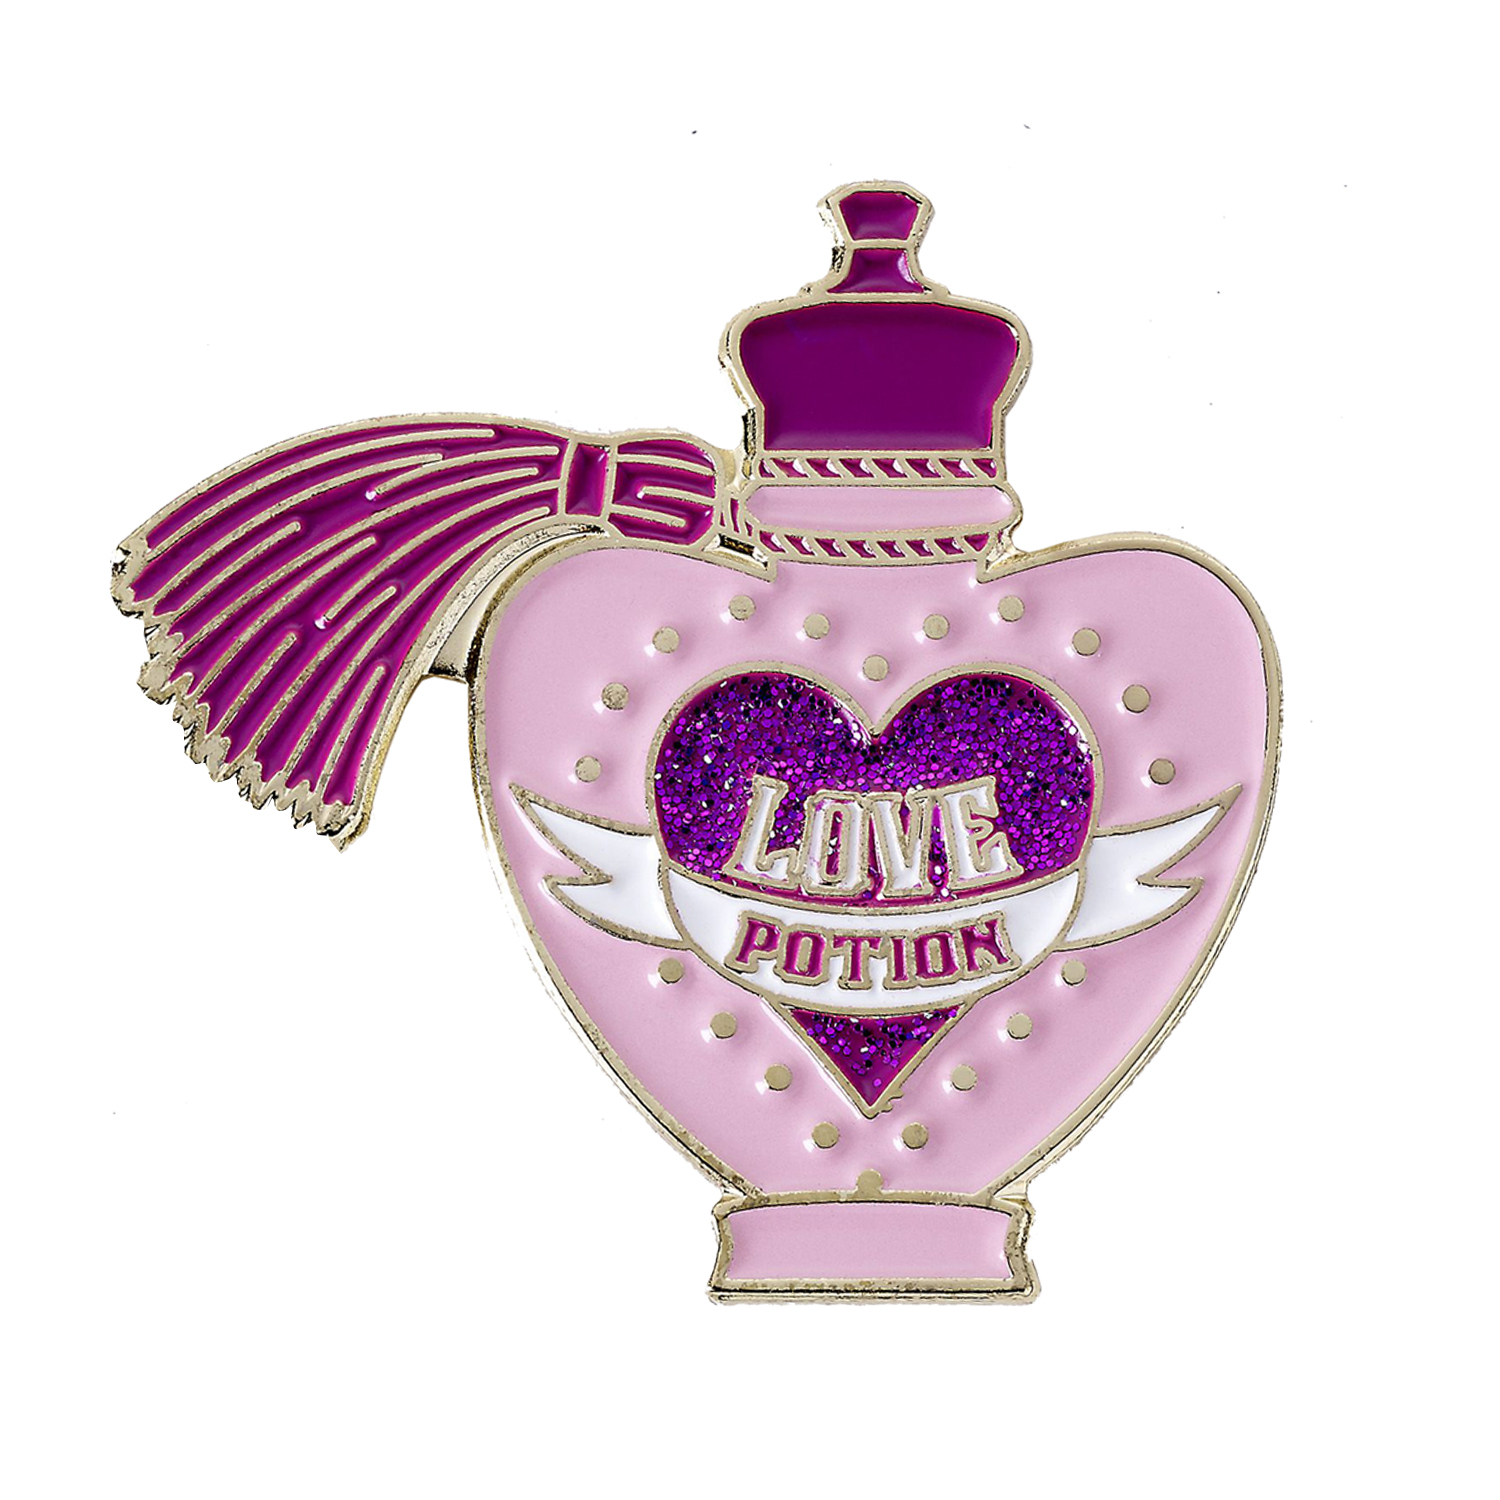 Harry potter - love potion - pin's